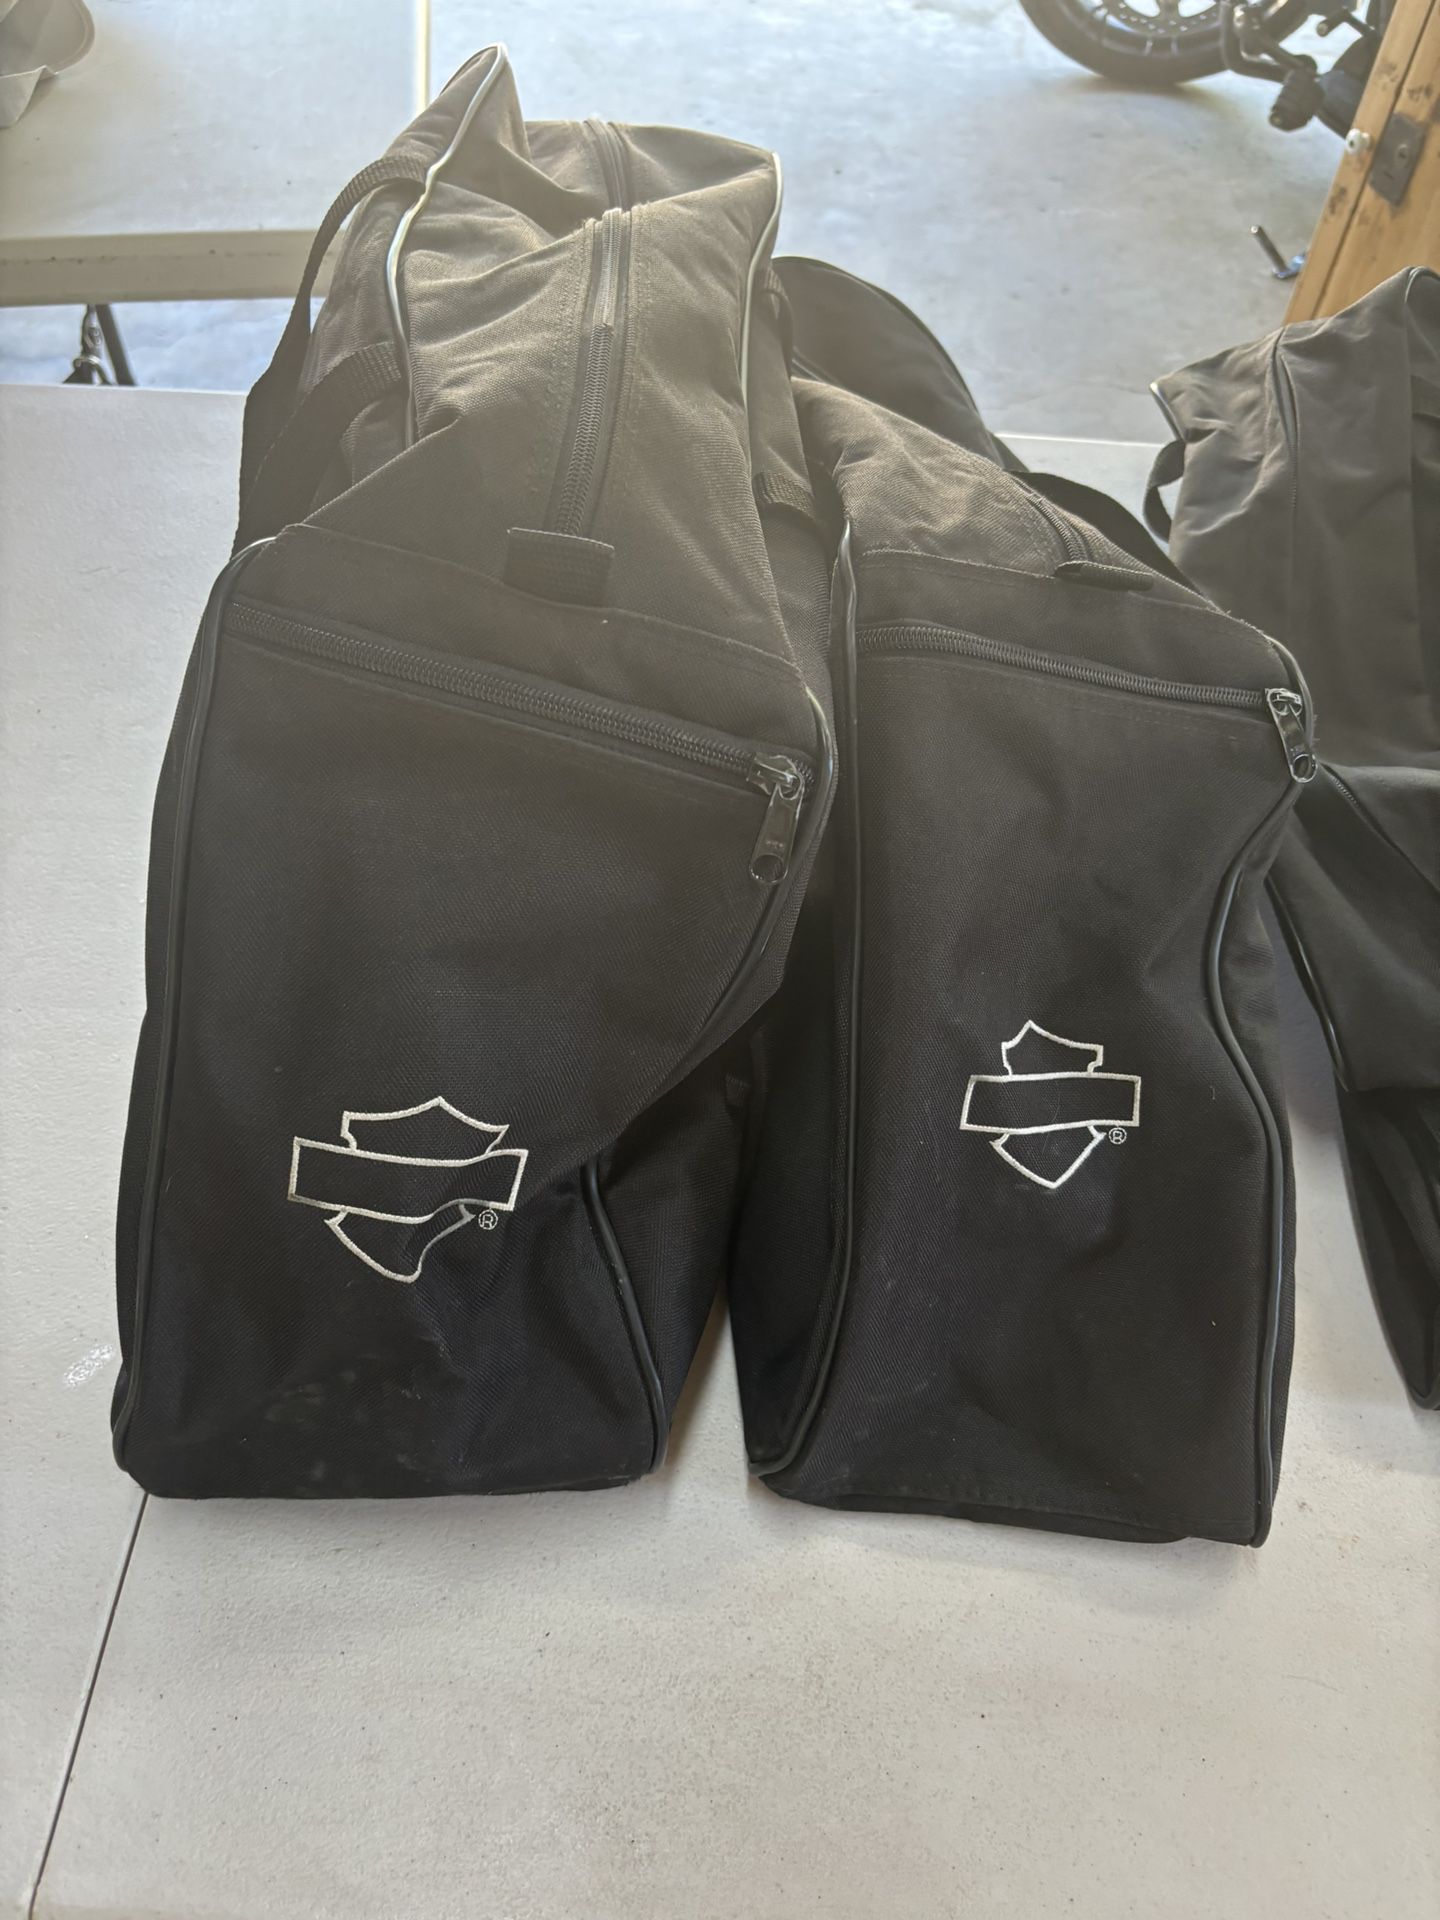 Harley Davidson Travel-Paks Insert Bags For Hard Bags